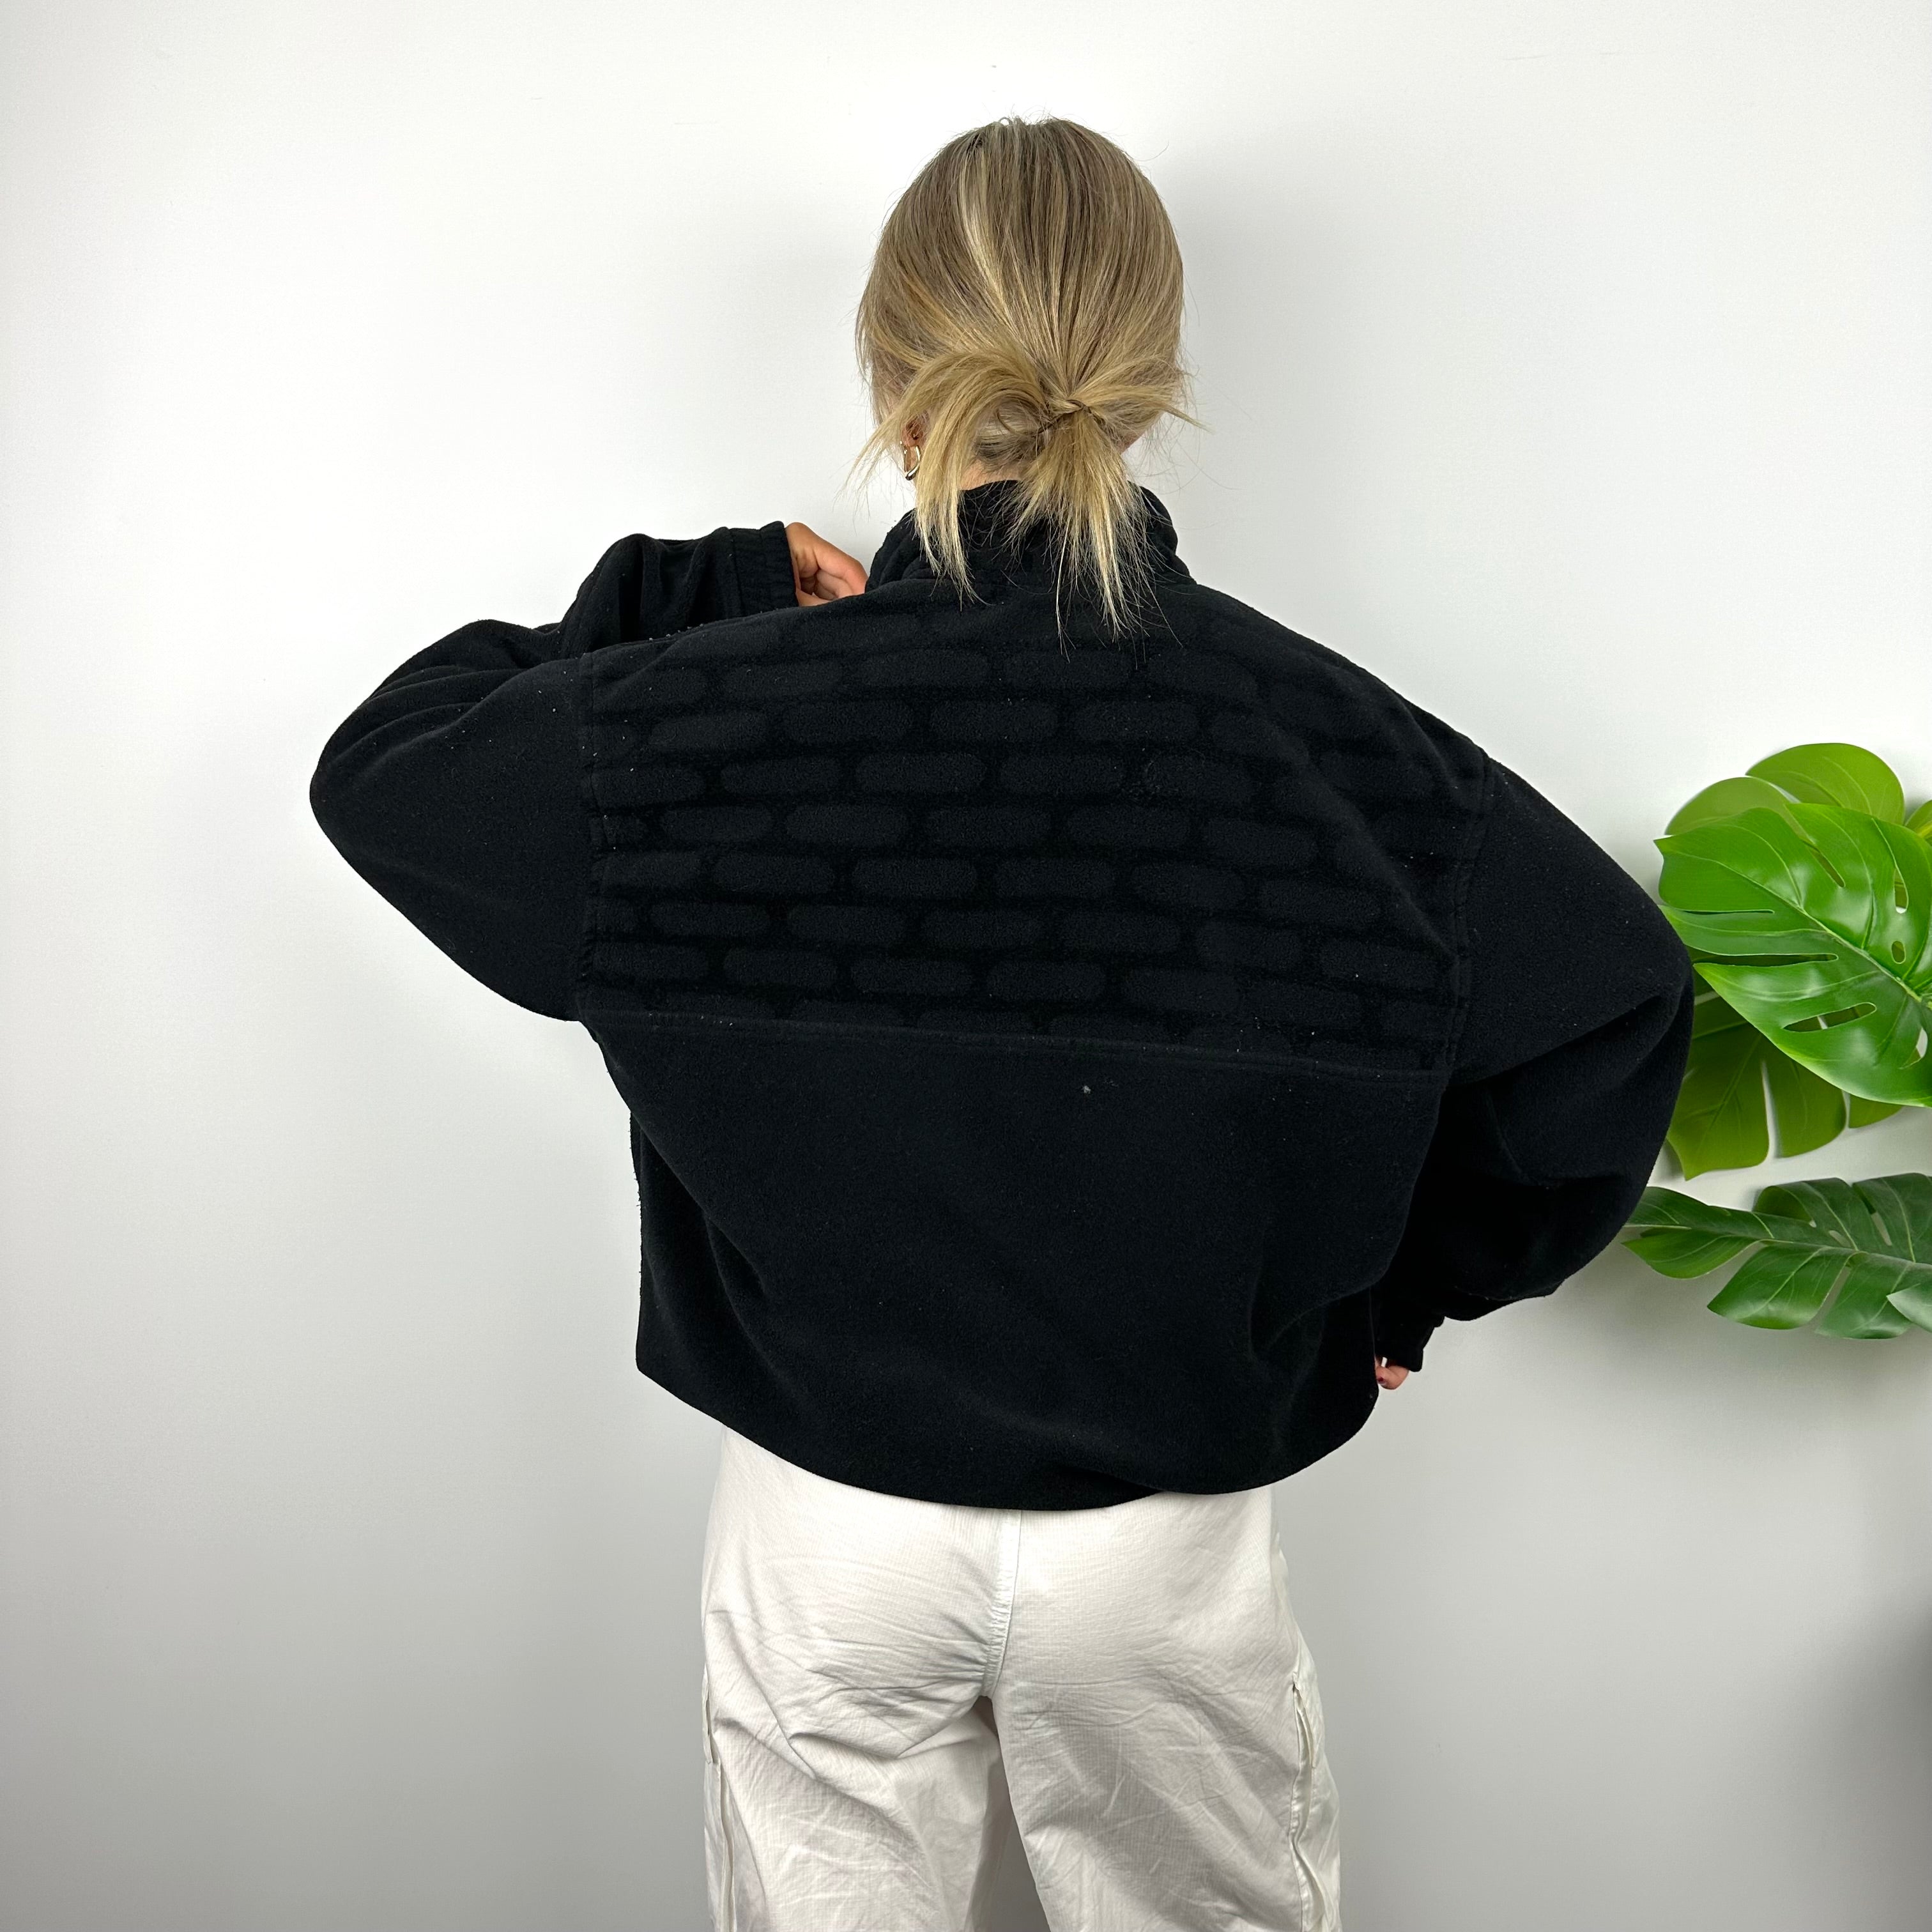 FILA Black Embroidered Spell Out Teddy Bear Fleece Quarter Zip Sweatshirt (M)